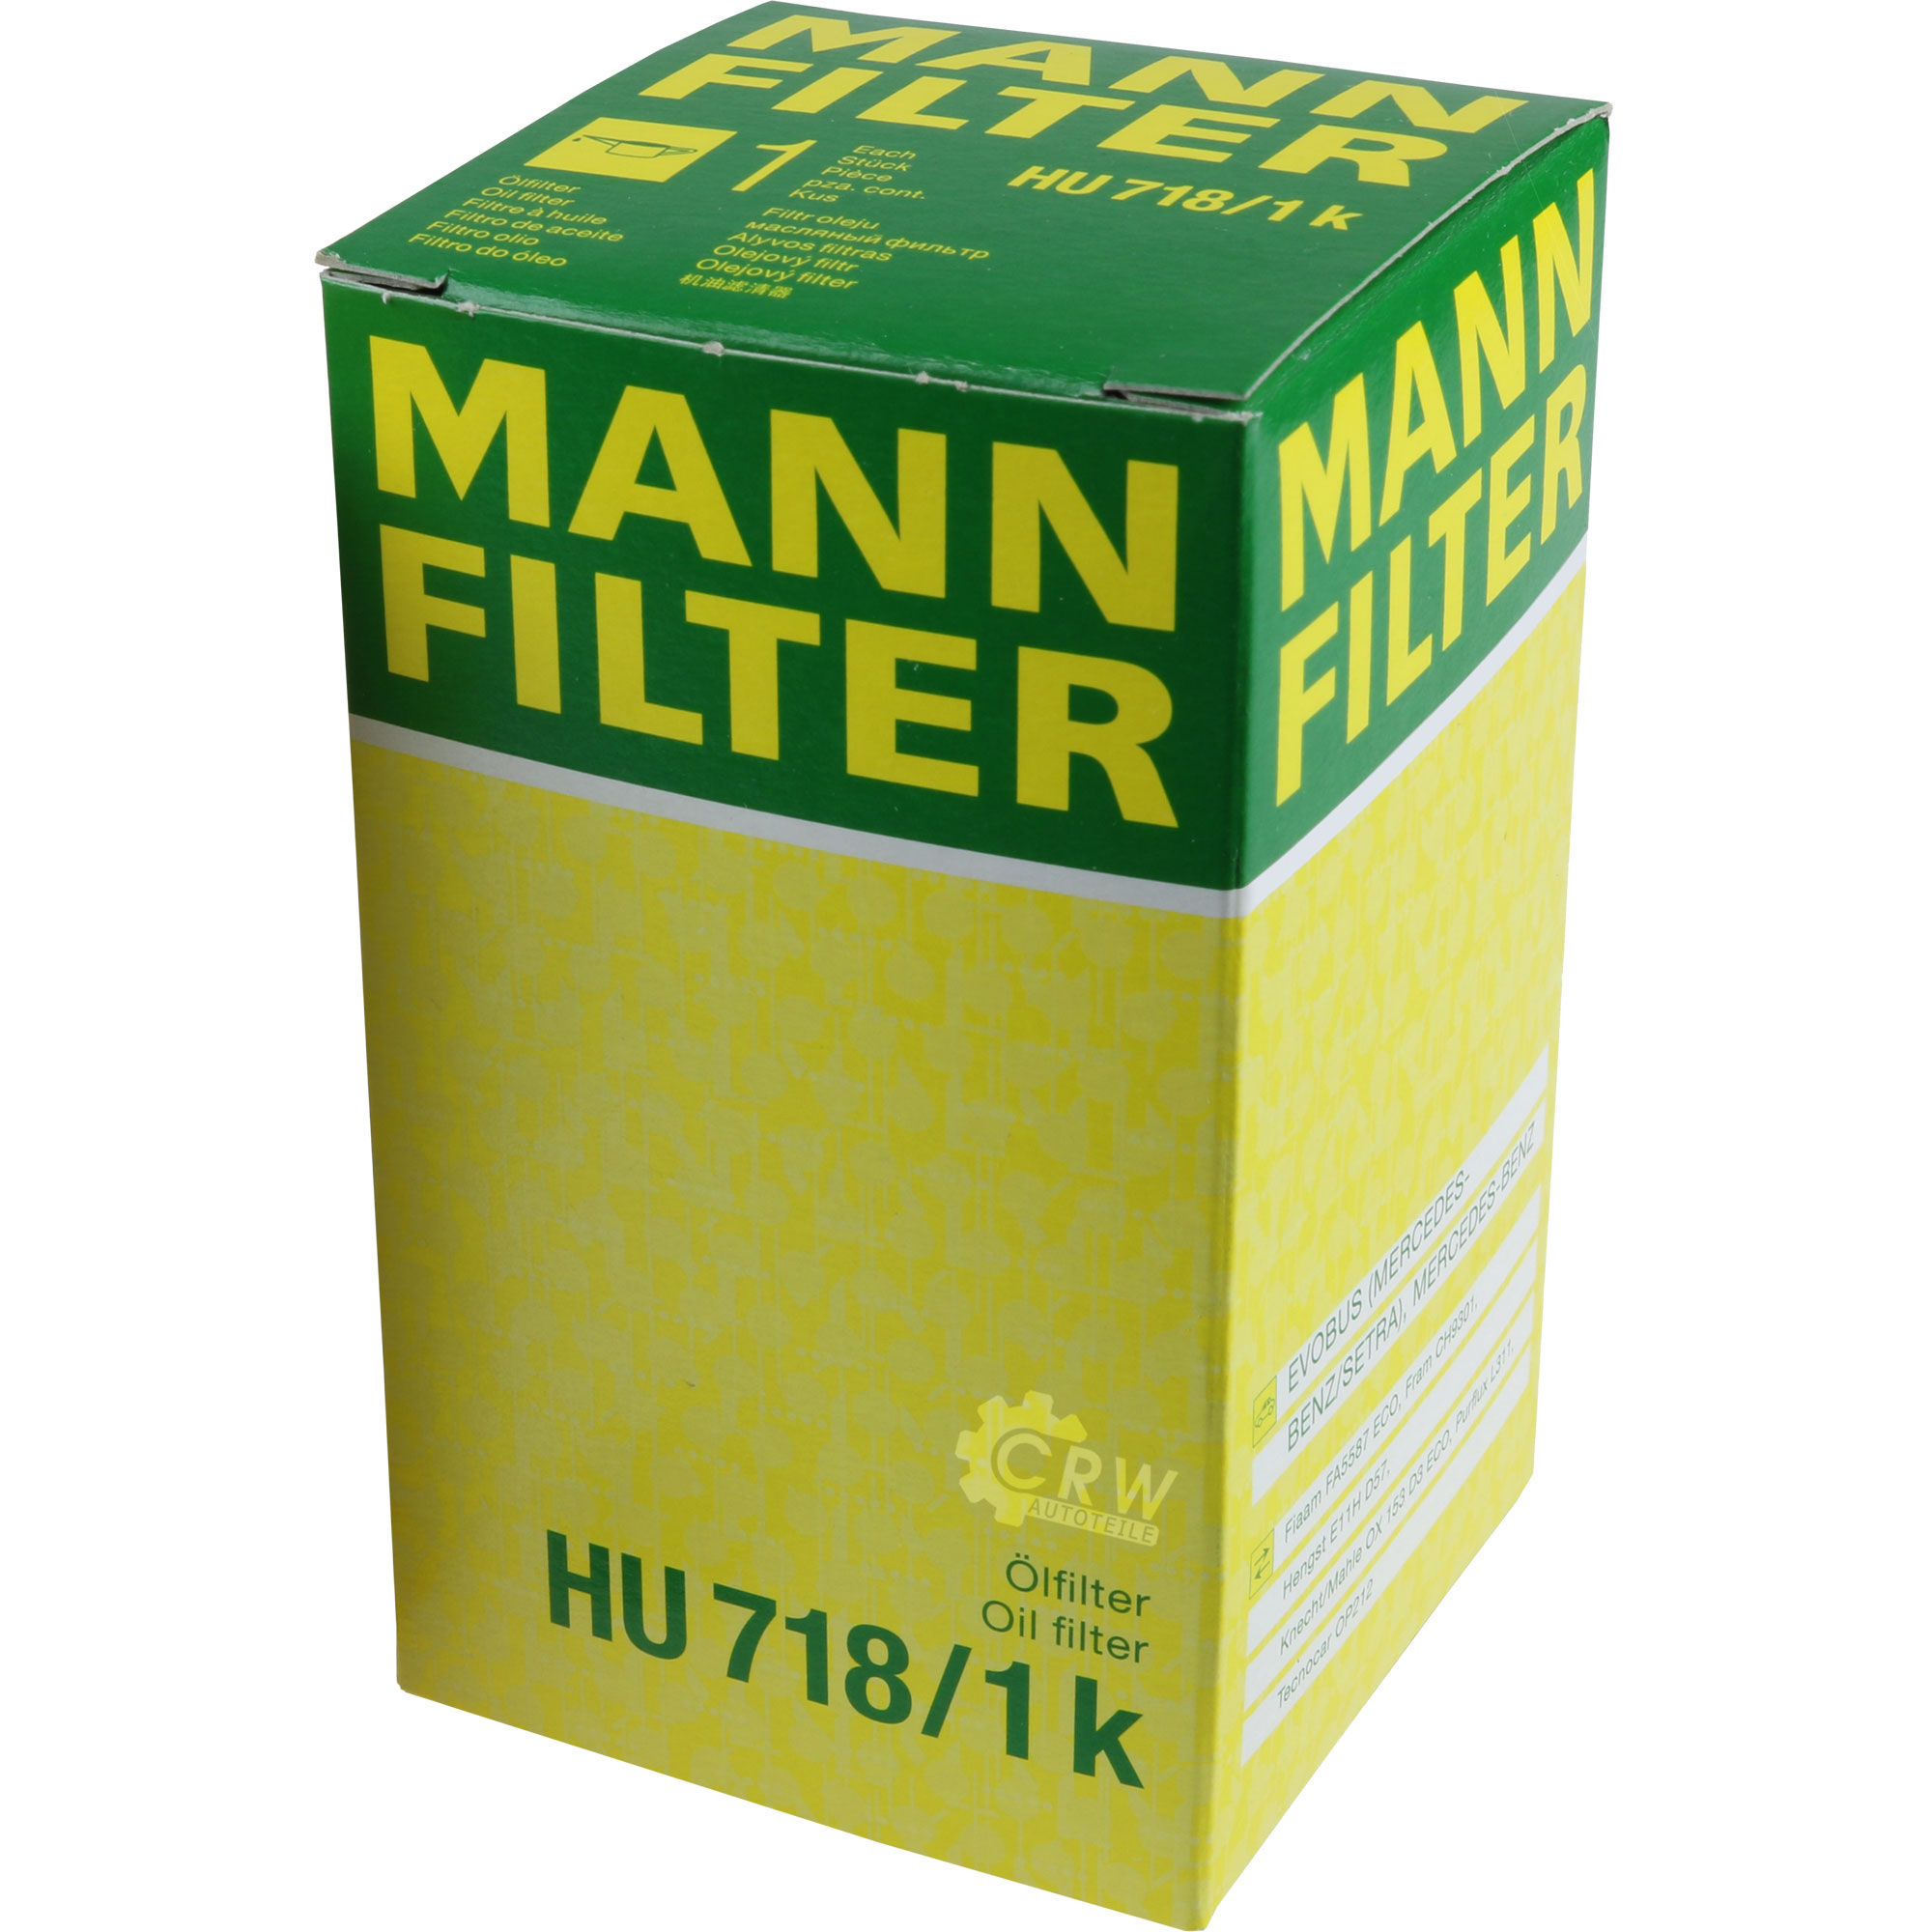 MANN-FILTER Ölfilter HU 718/1 k Oil Filter